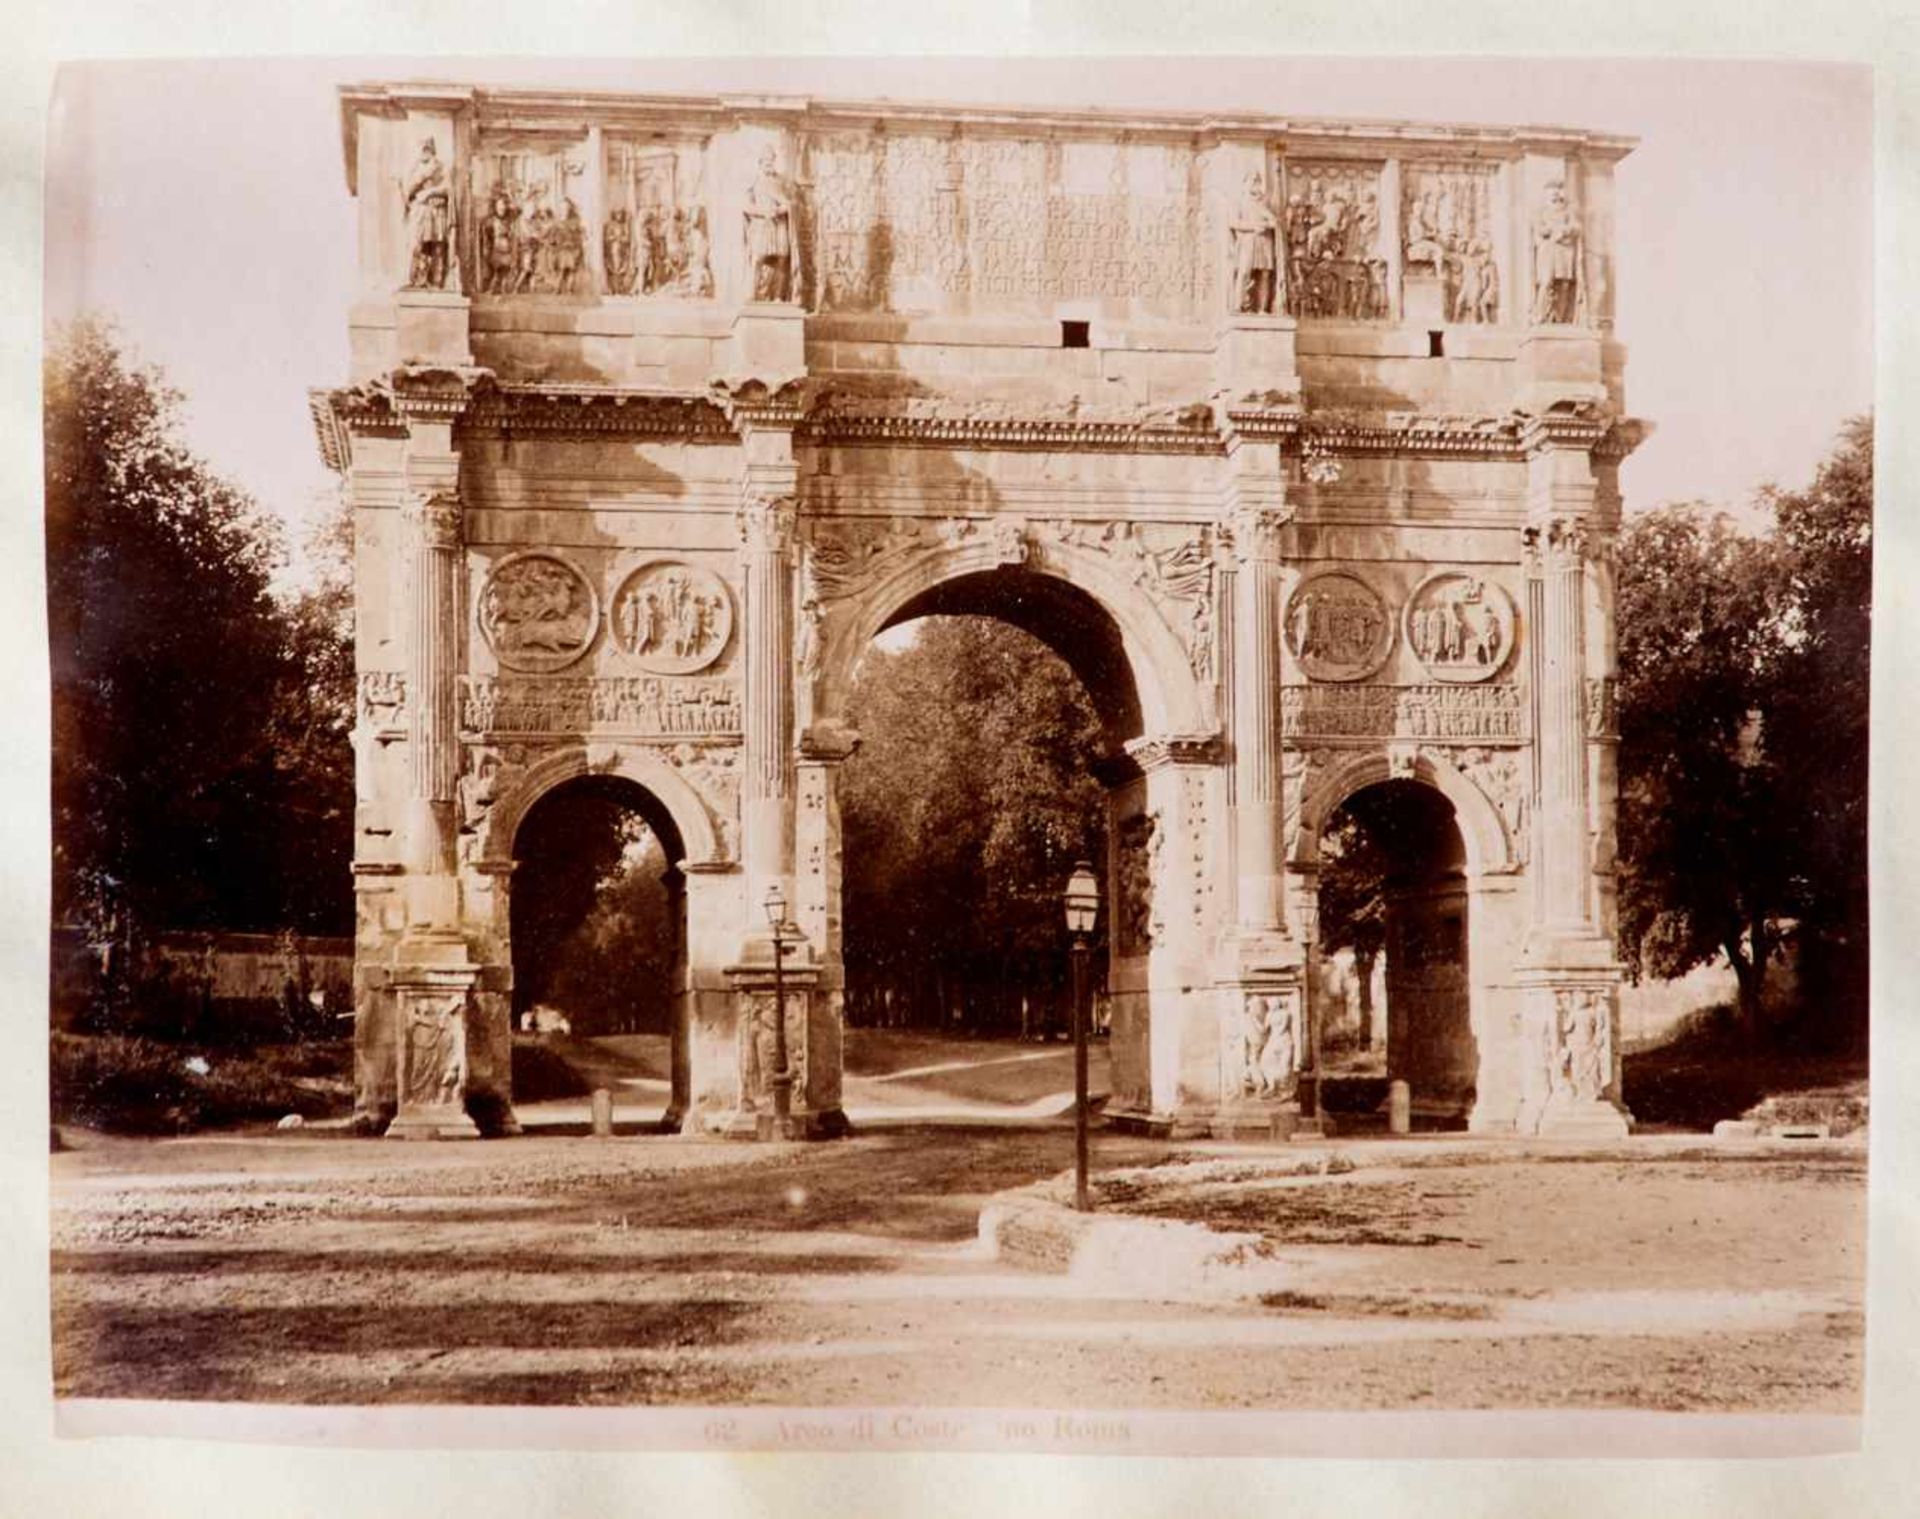 Italien- Album mit 66 mont. Photographien.Um 1890. Ca. 33 x 25 cm. Photographien ca. 24,5 x 19 cm. - Bild 4 aus 5